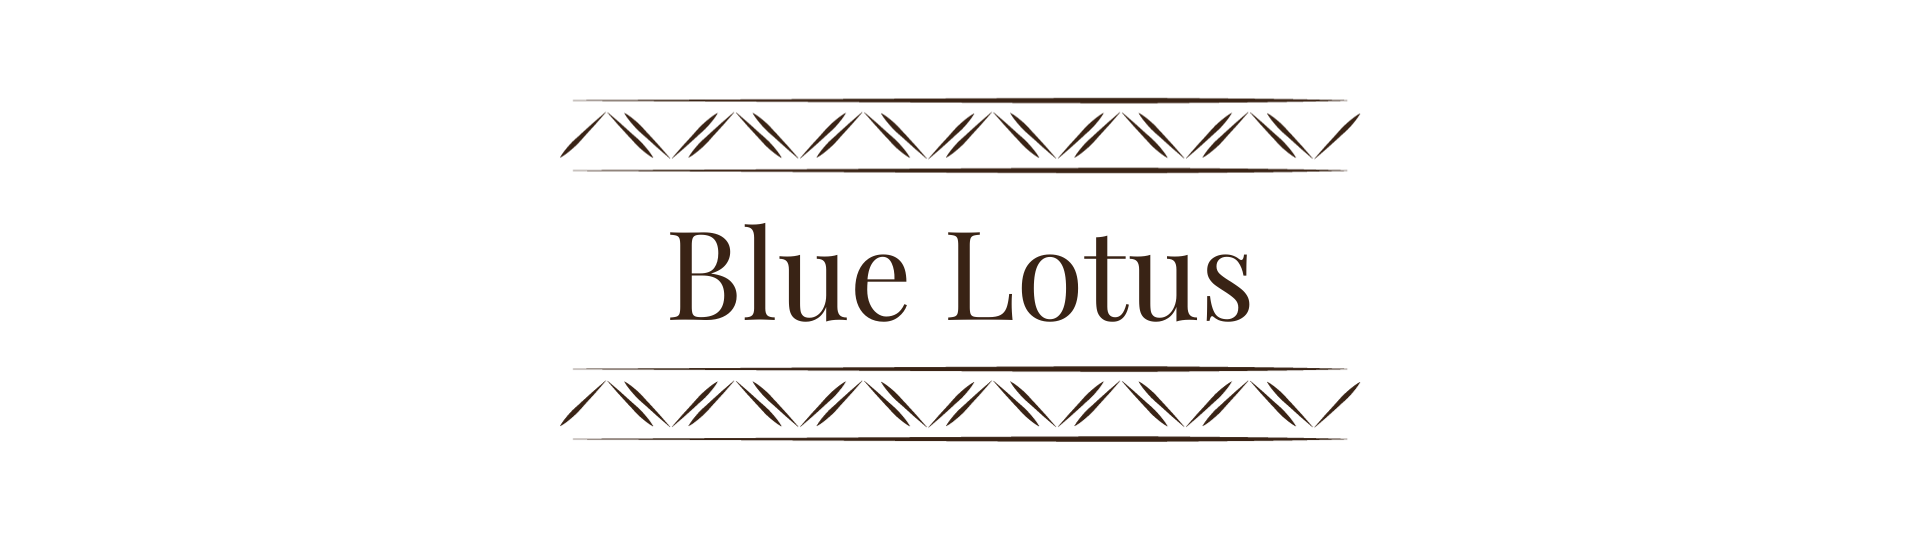 Blauwe lotus van MOOJO